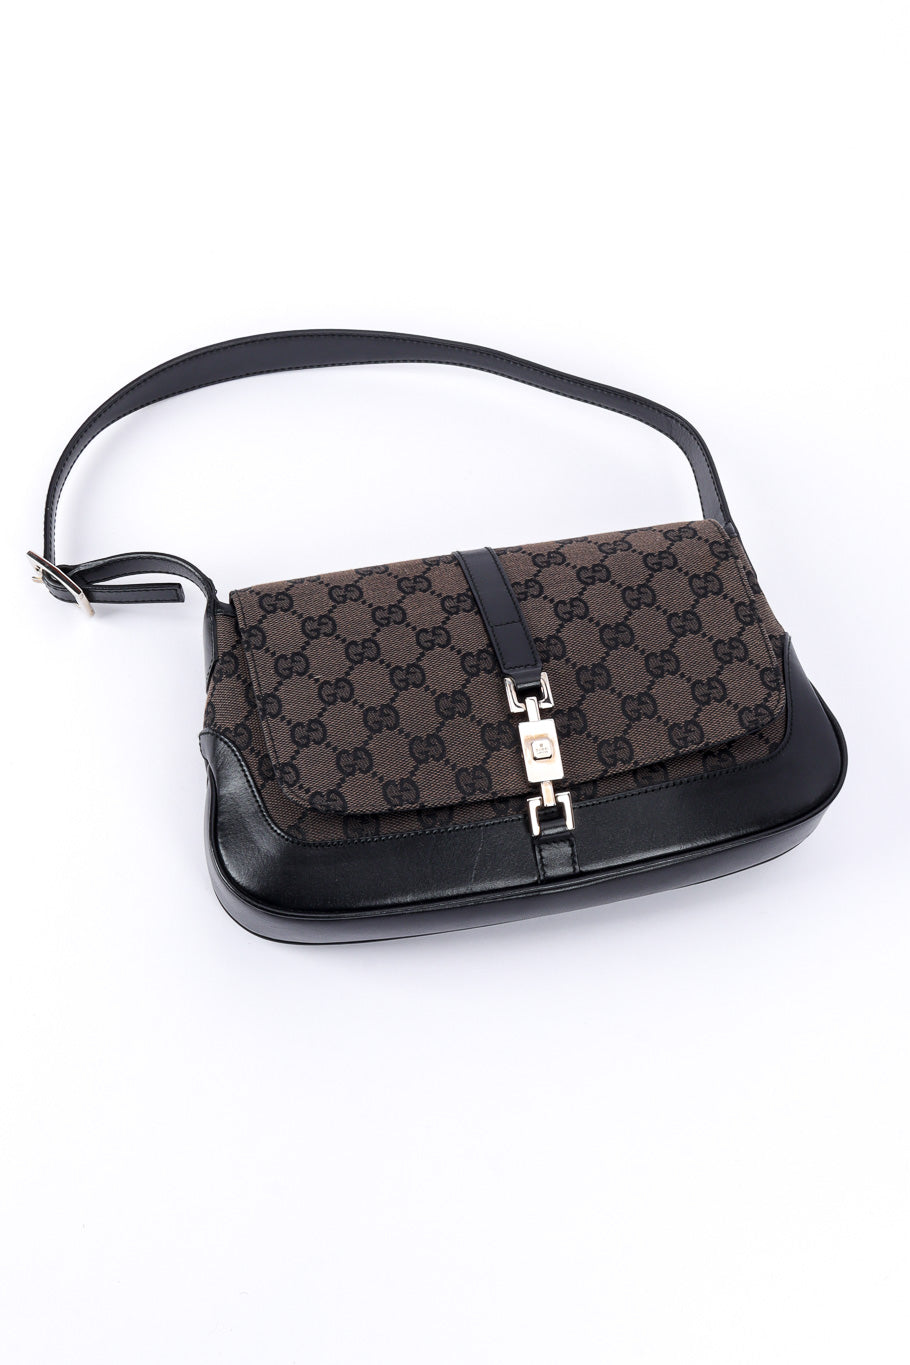 Gucci Jackie Crossbody Bags